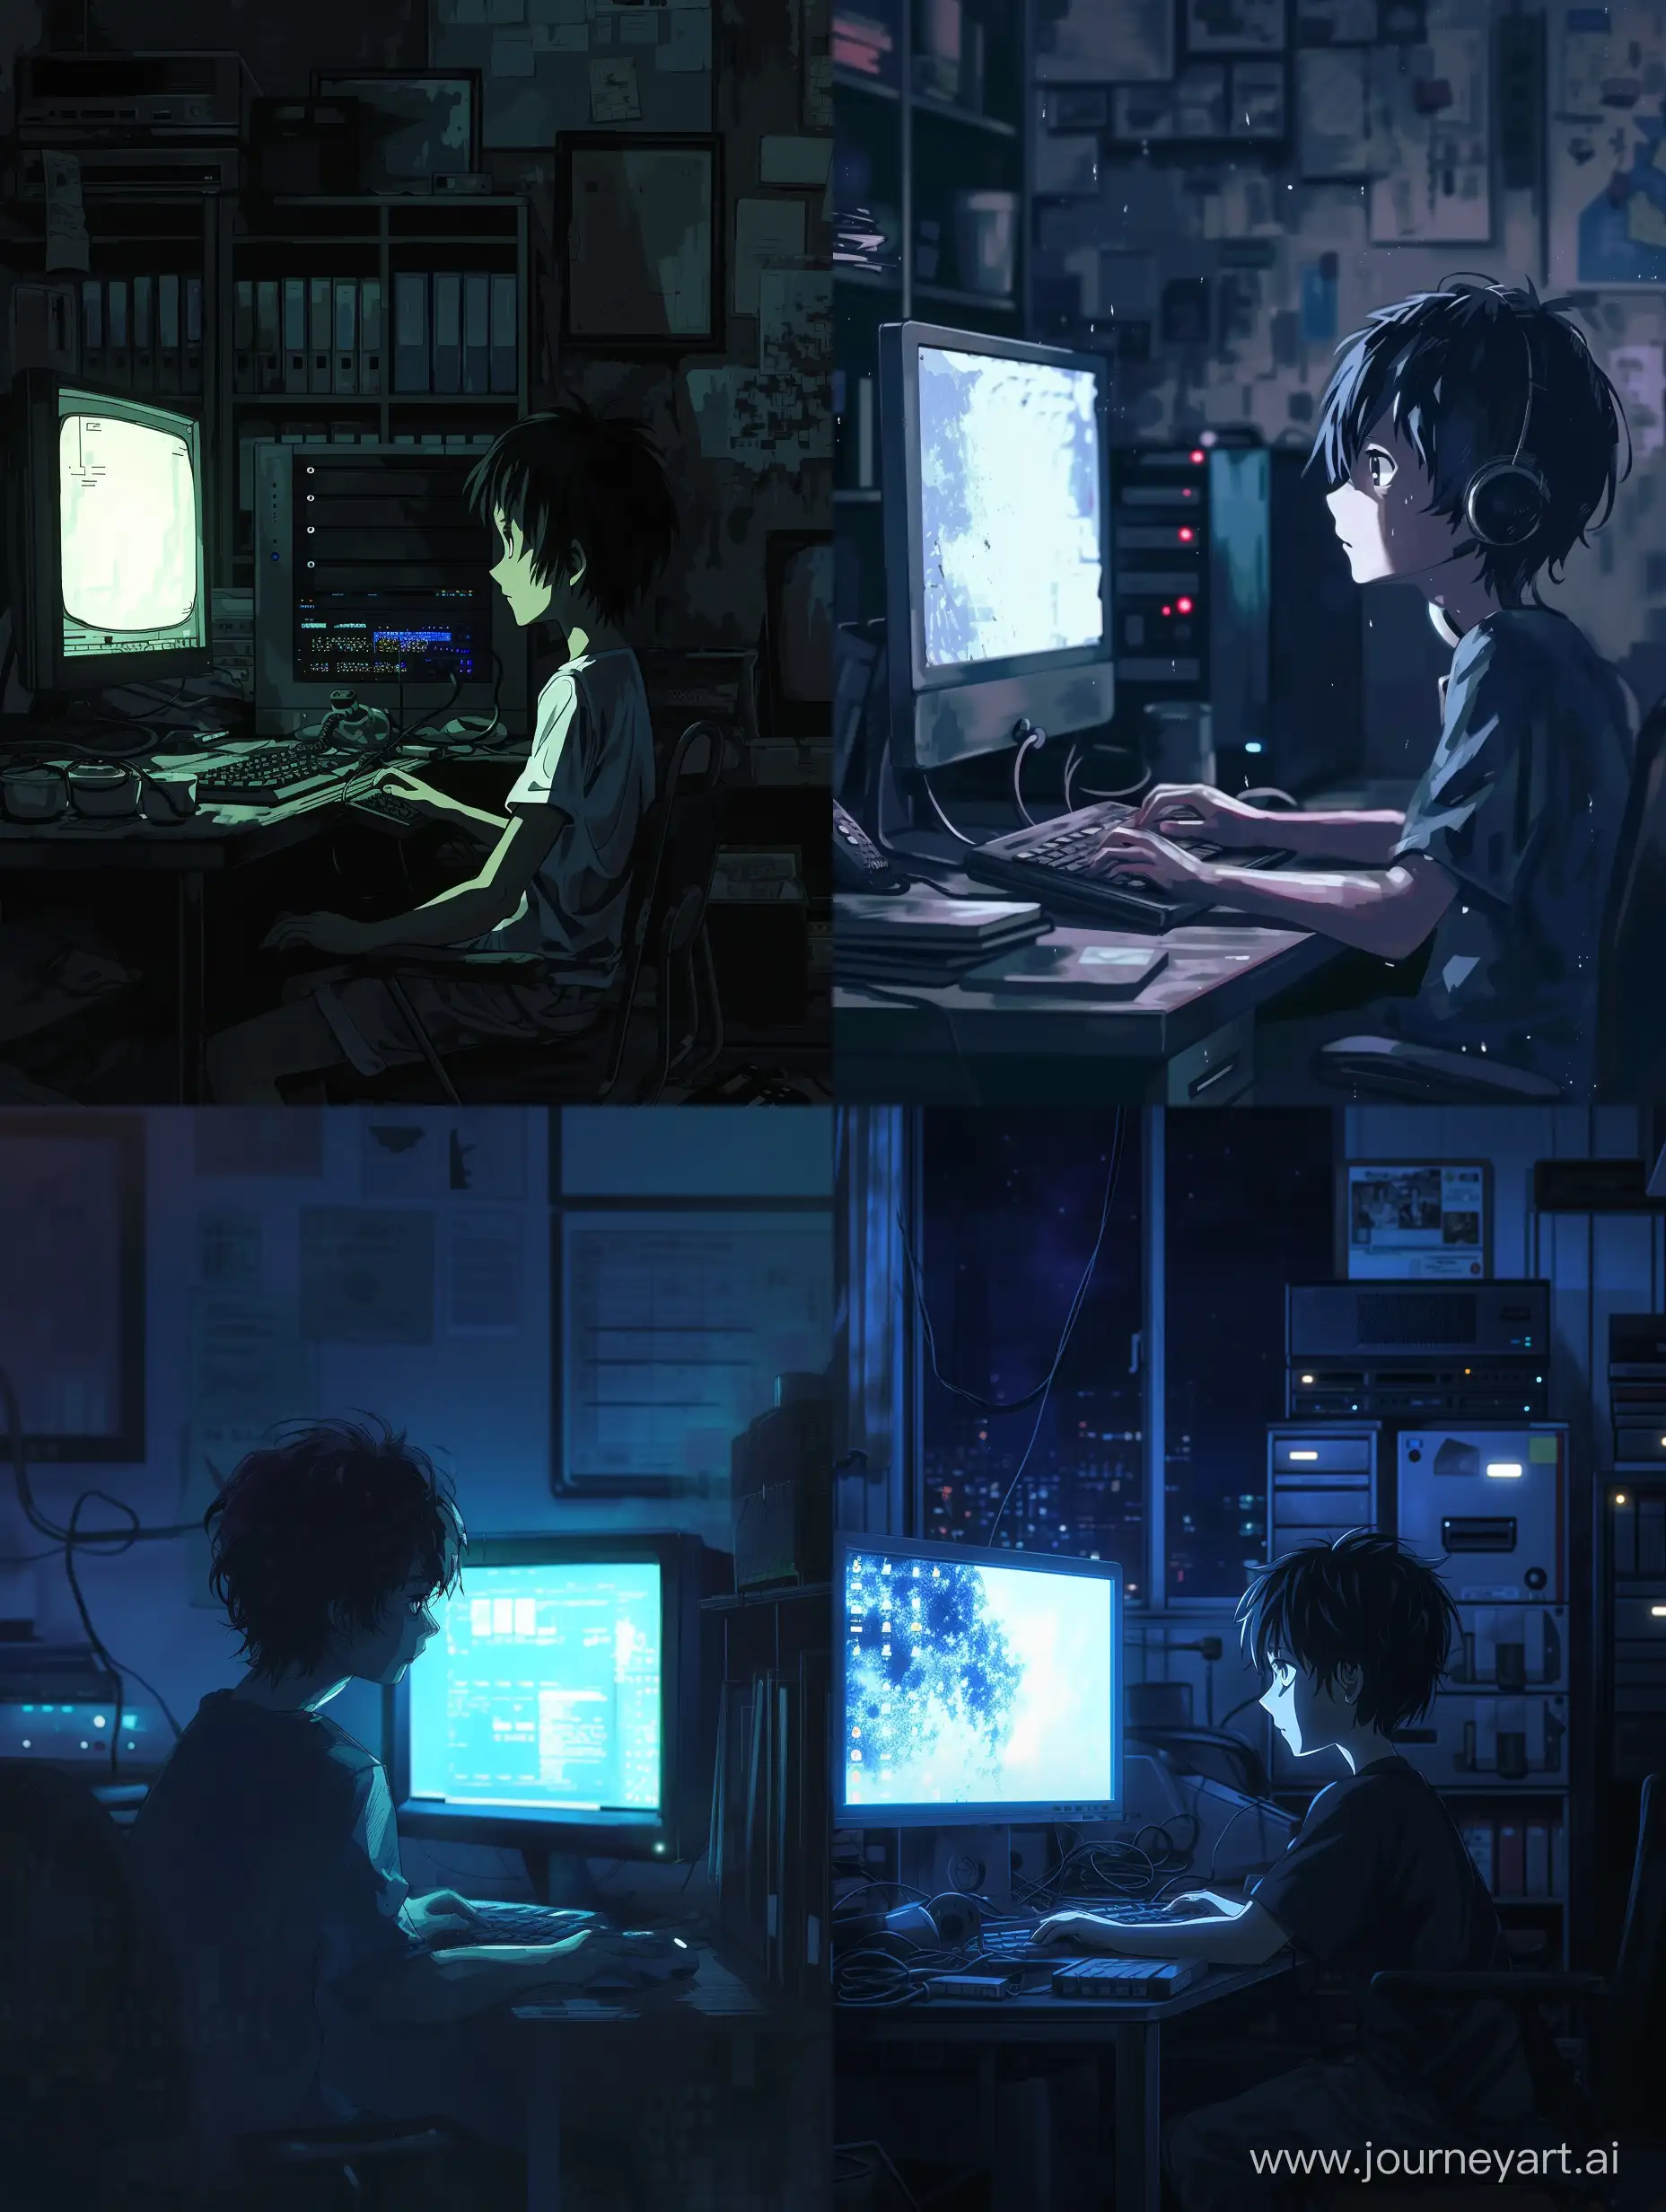 anime style, boy and computer, dark room.